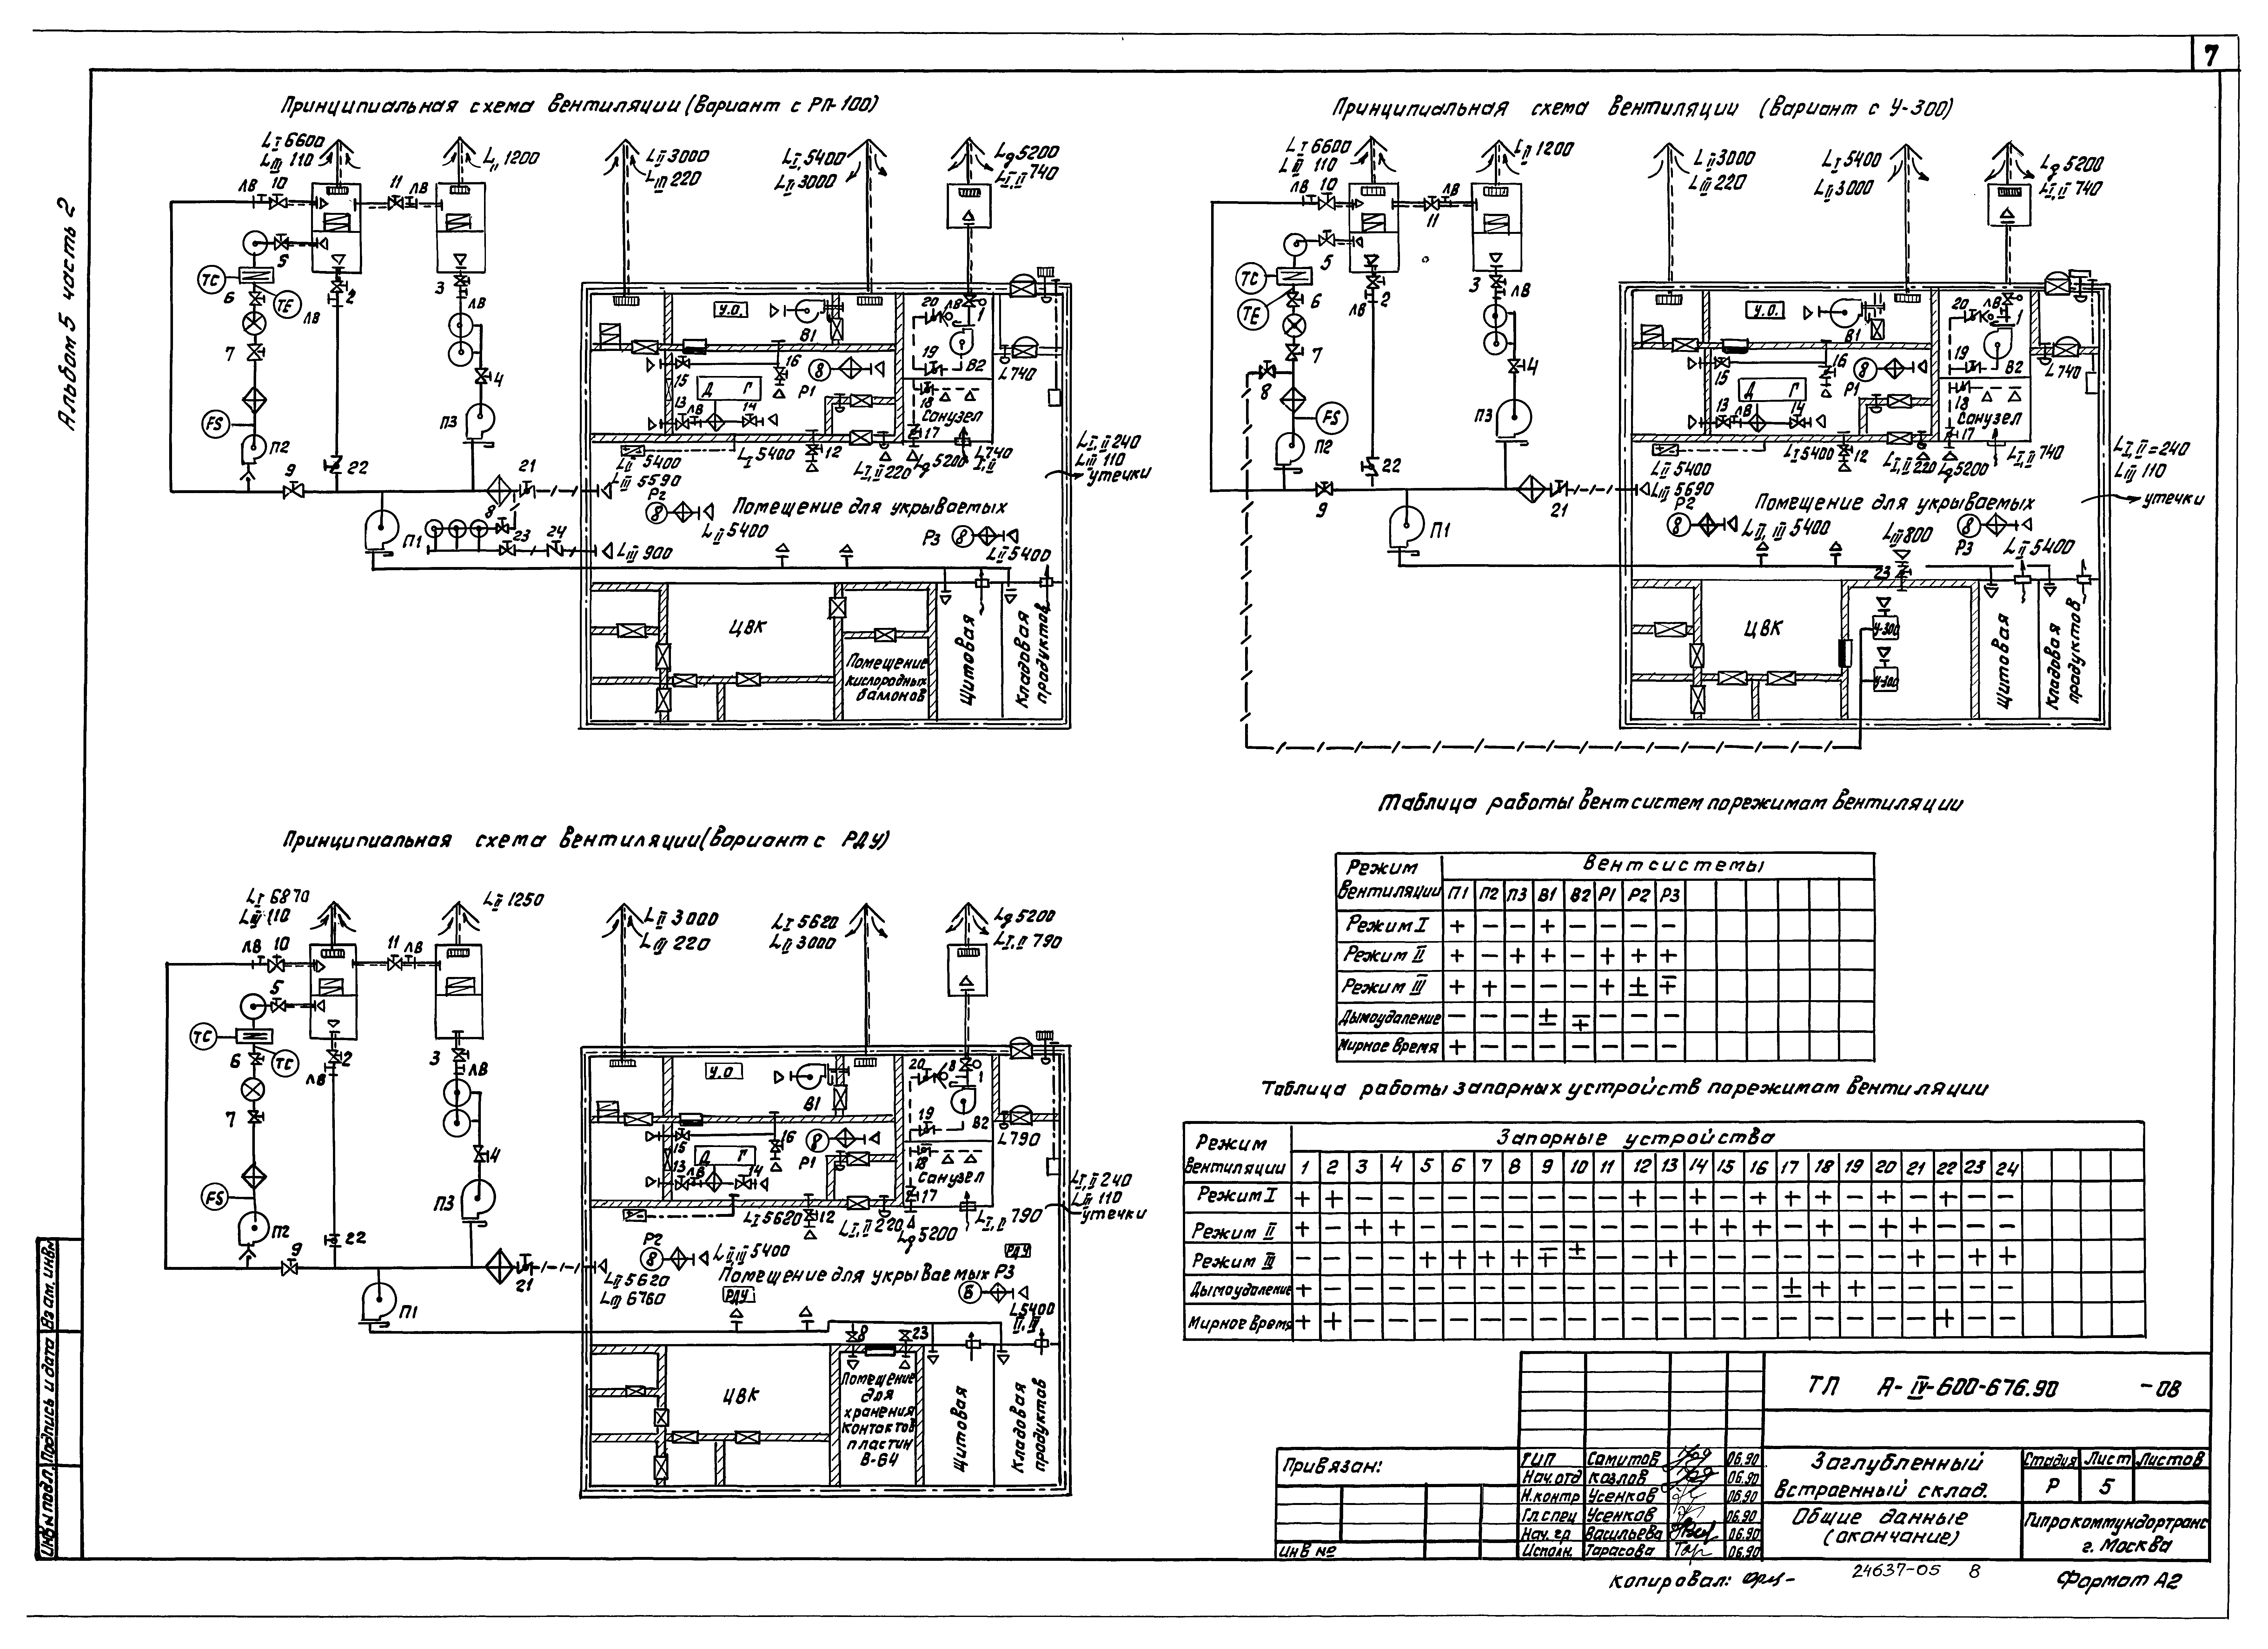 Типовой проект А-IV-600-476.90